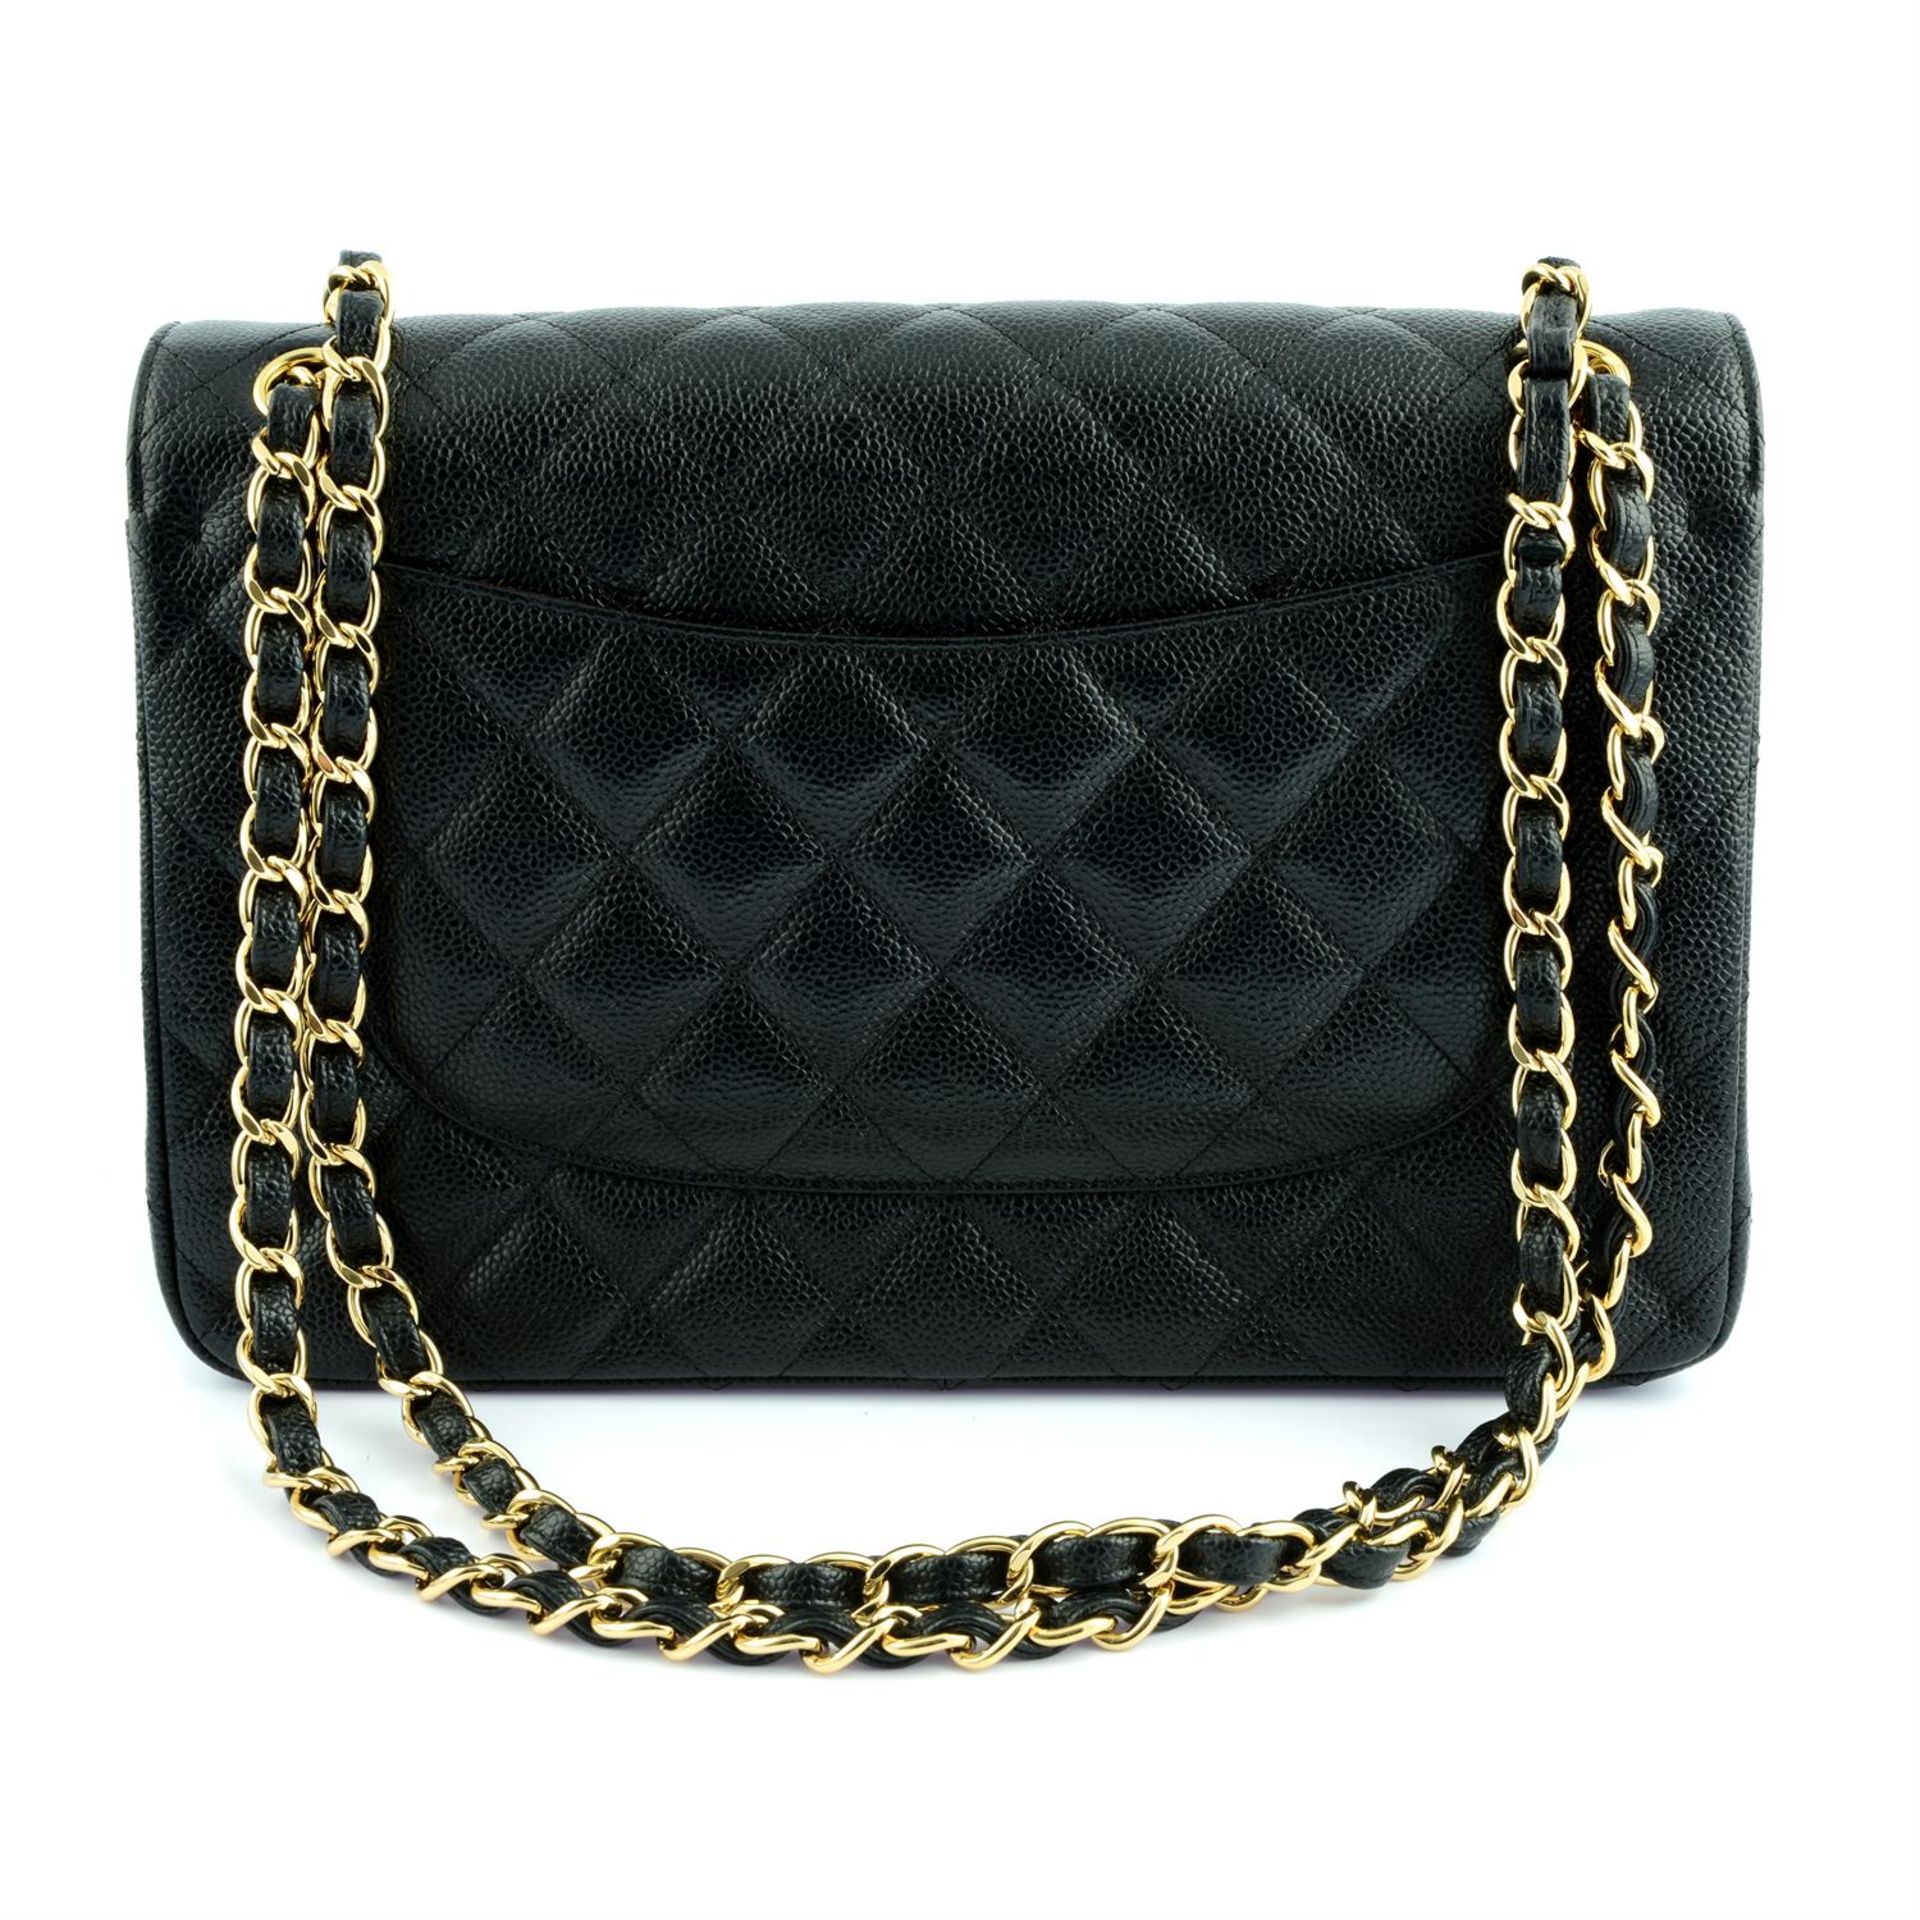 CHANEL - a black Caviar leather Jumbo Classic double flap handbag. - Image 2 of 6